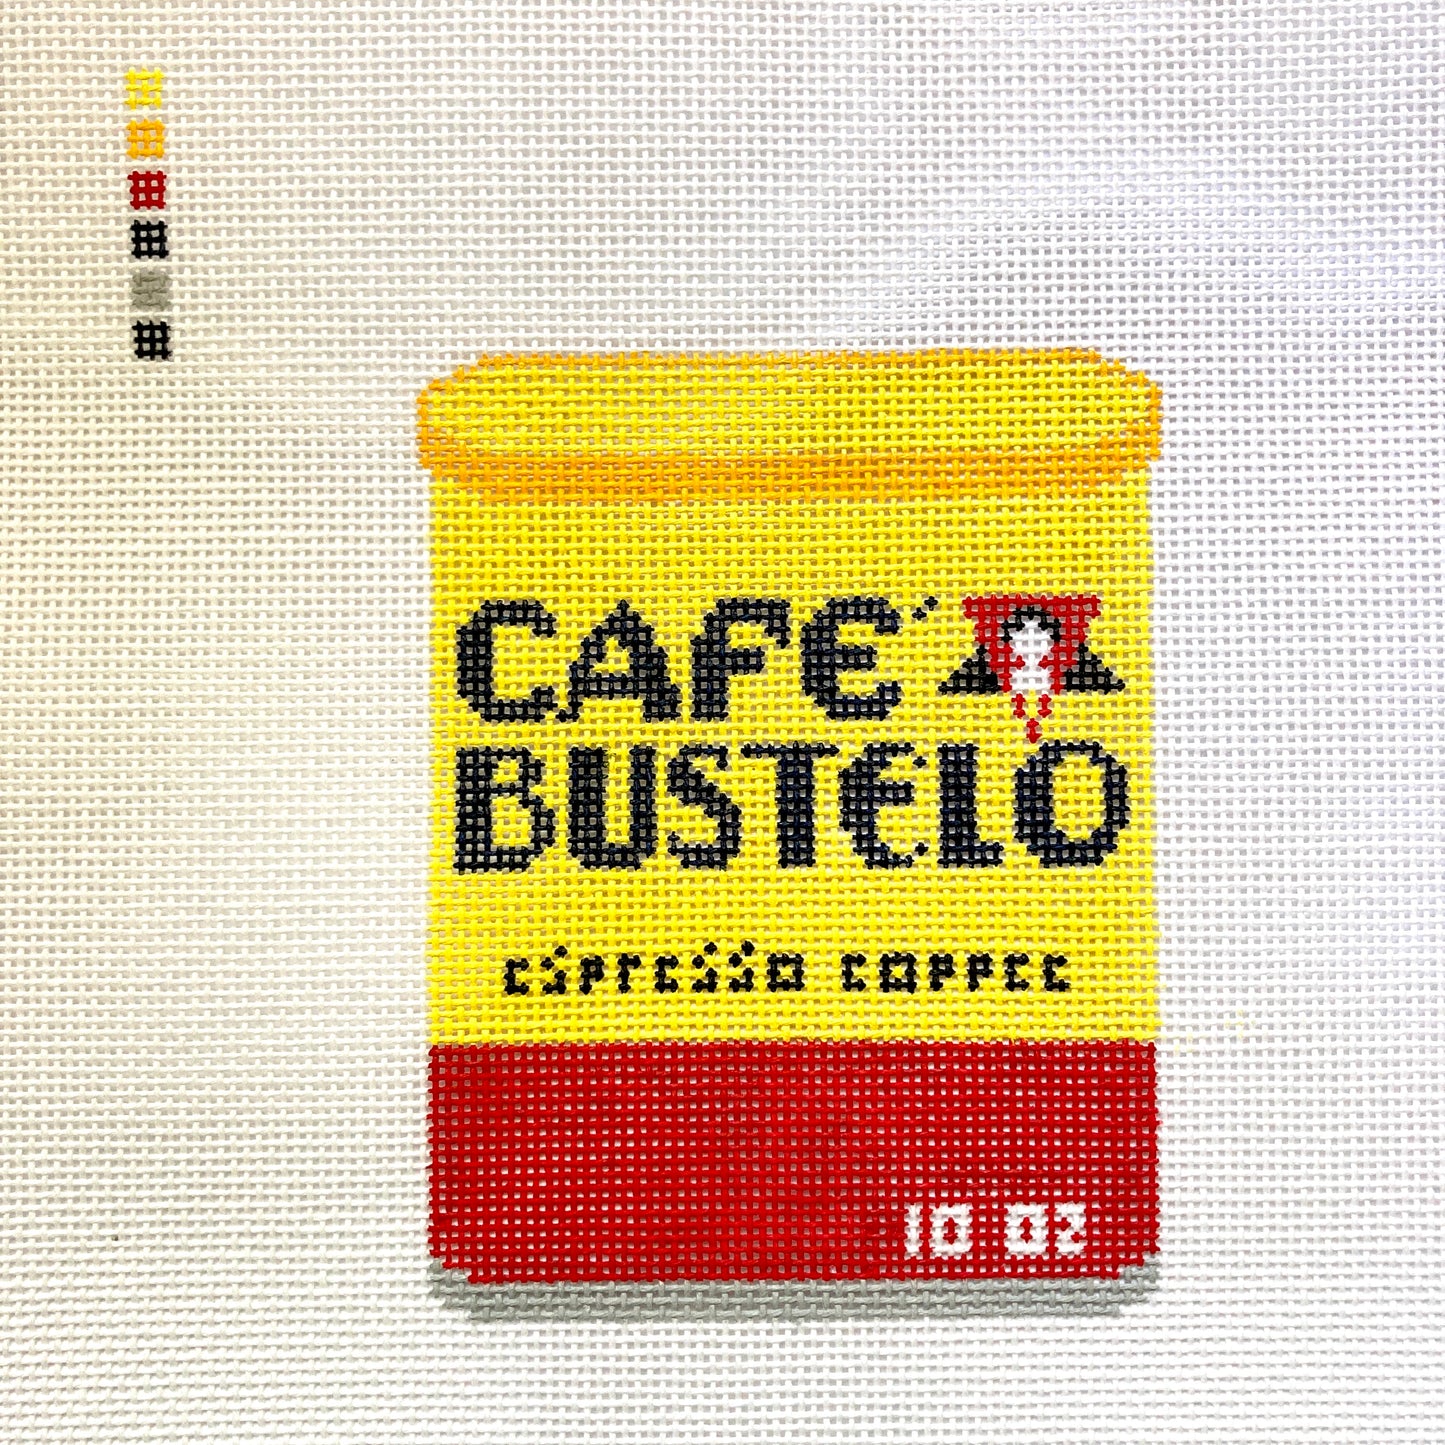 Cafe Bustelo Espresso Tin